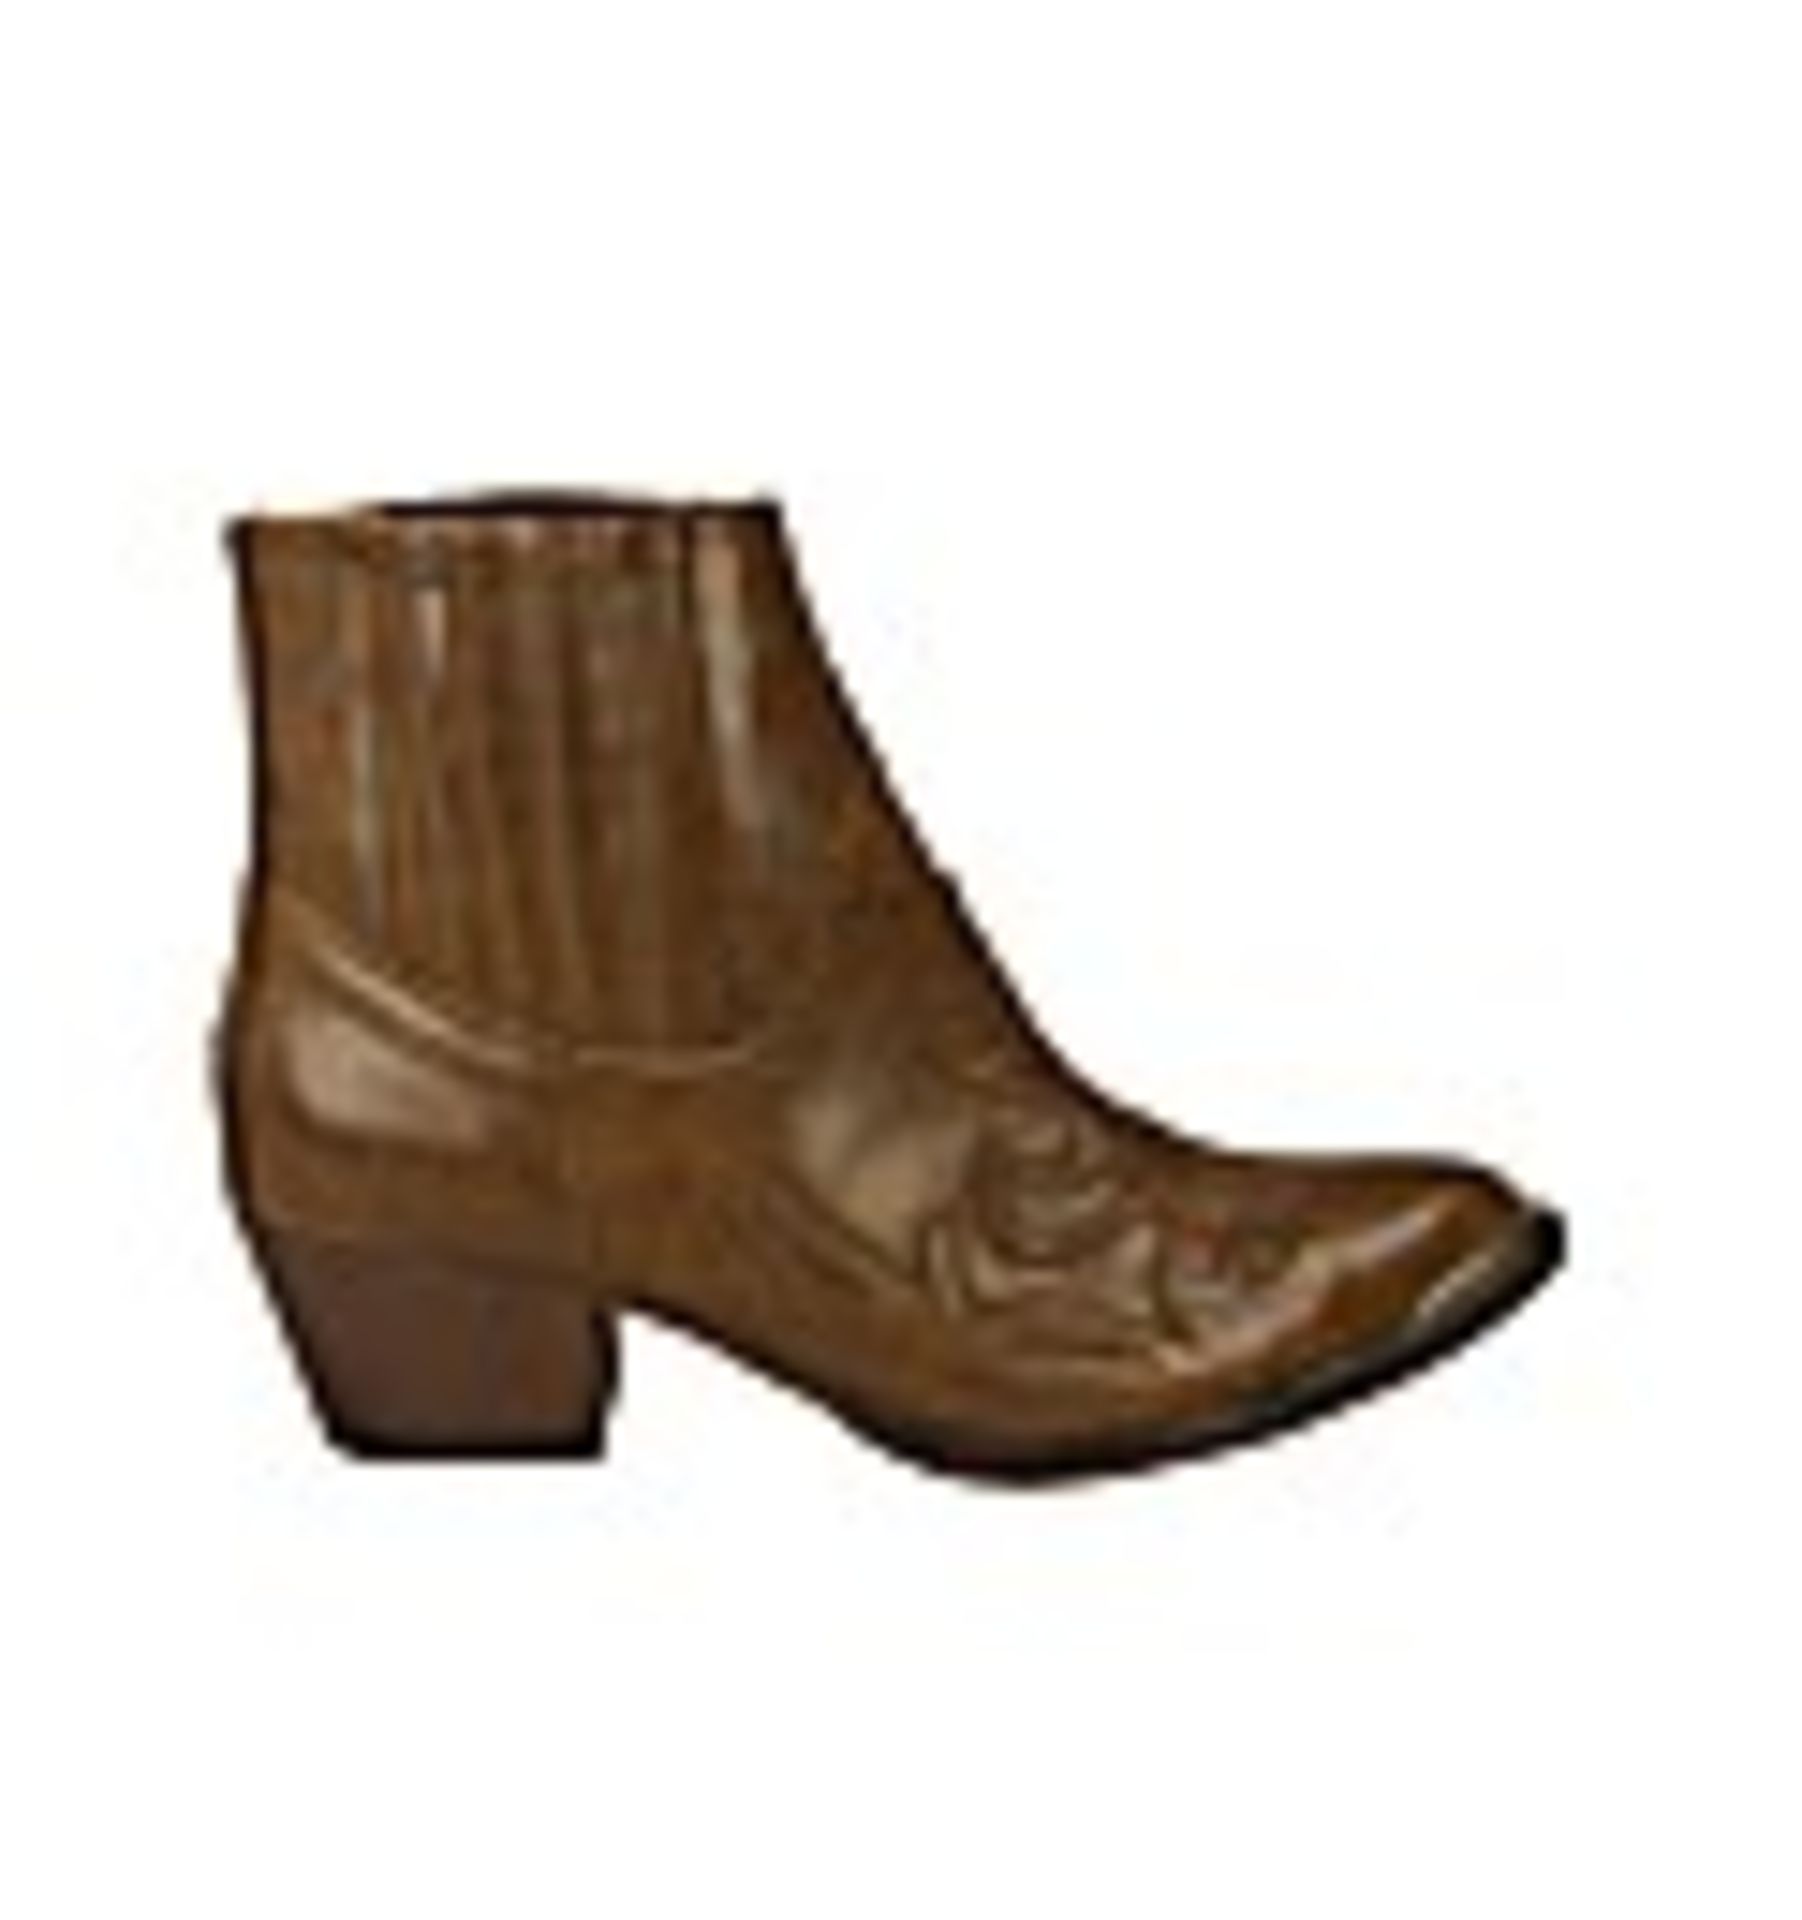 + VAT Brand New Pair Ladies Tan Western Boots Size 4